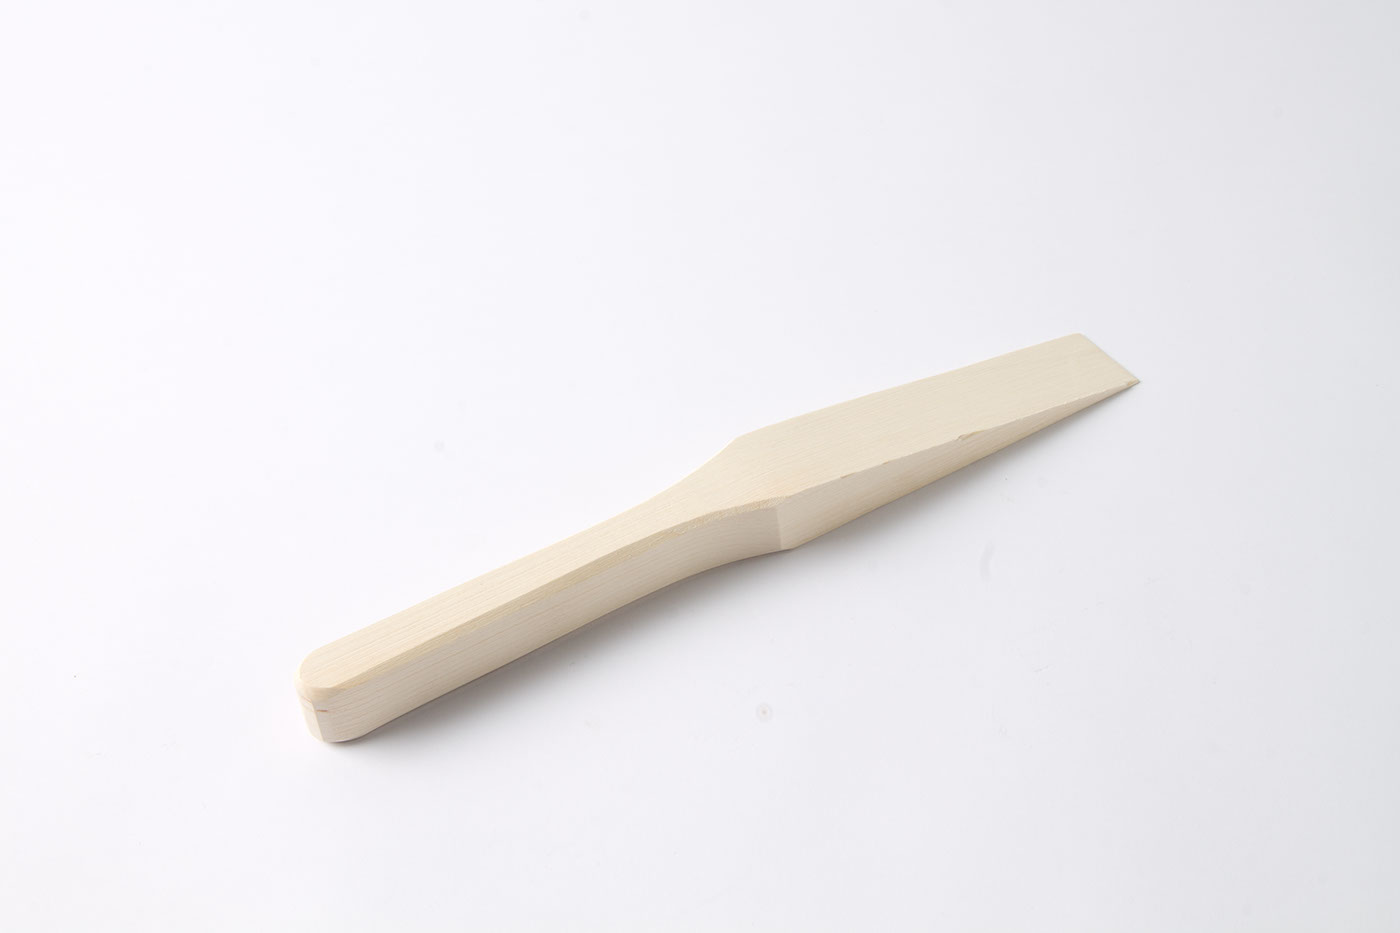 Holzspachtel
Wooden paddle